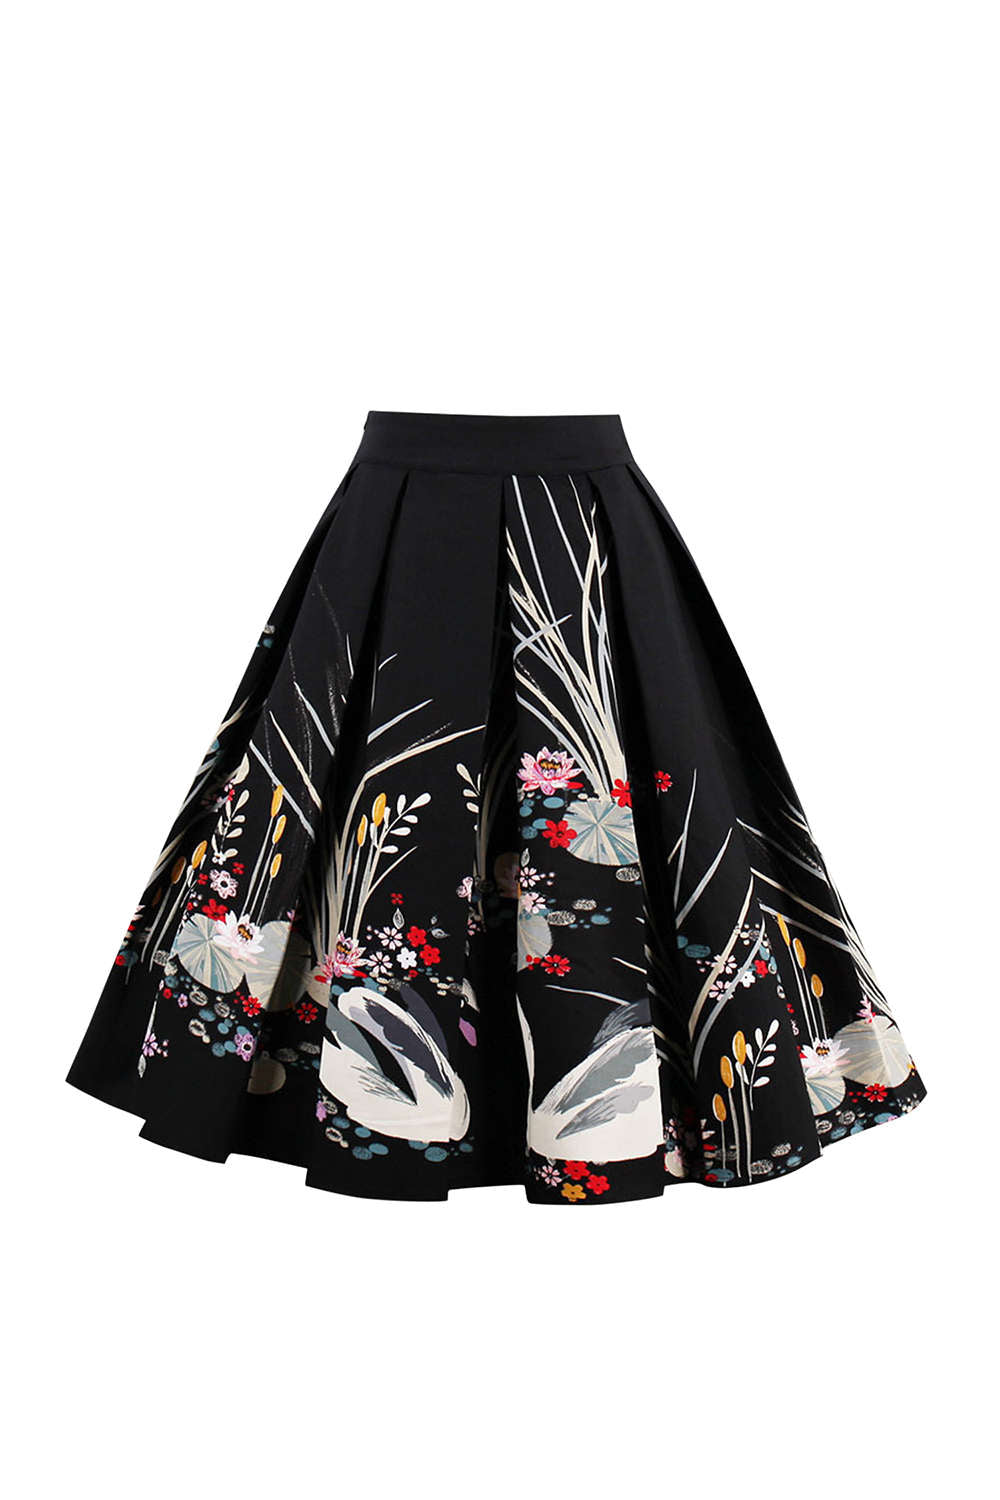 Iyasson High Waist Floral Printed Pleated Skirt